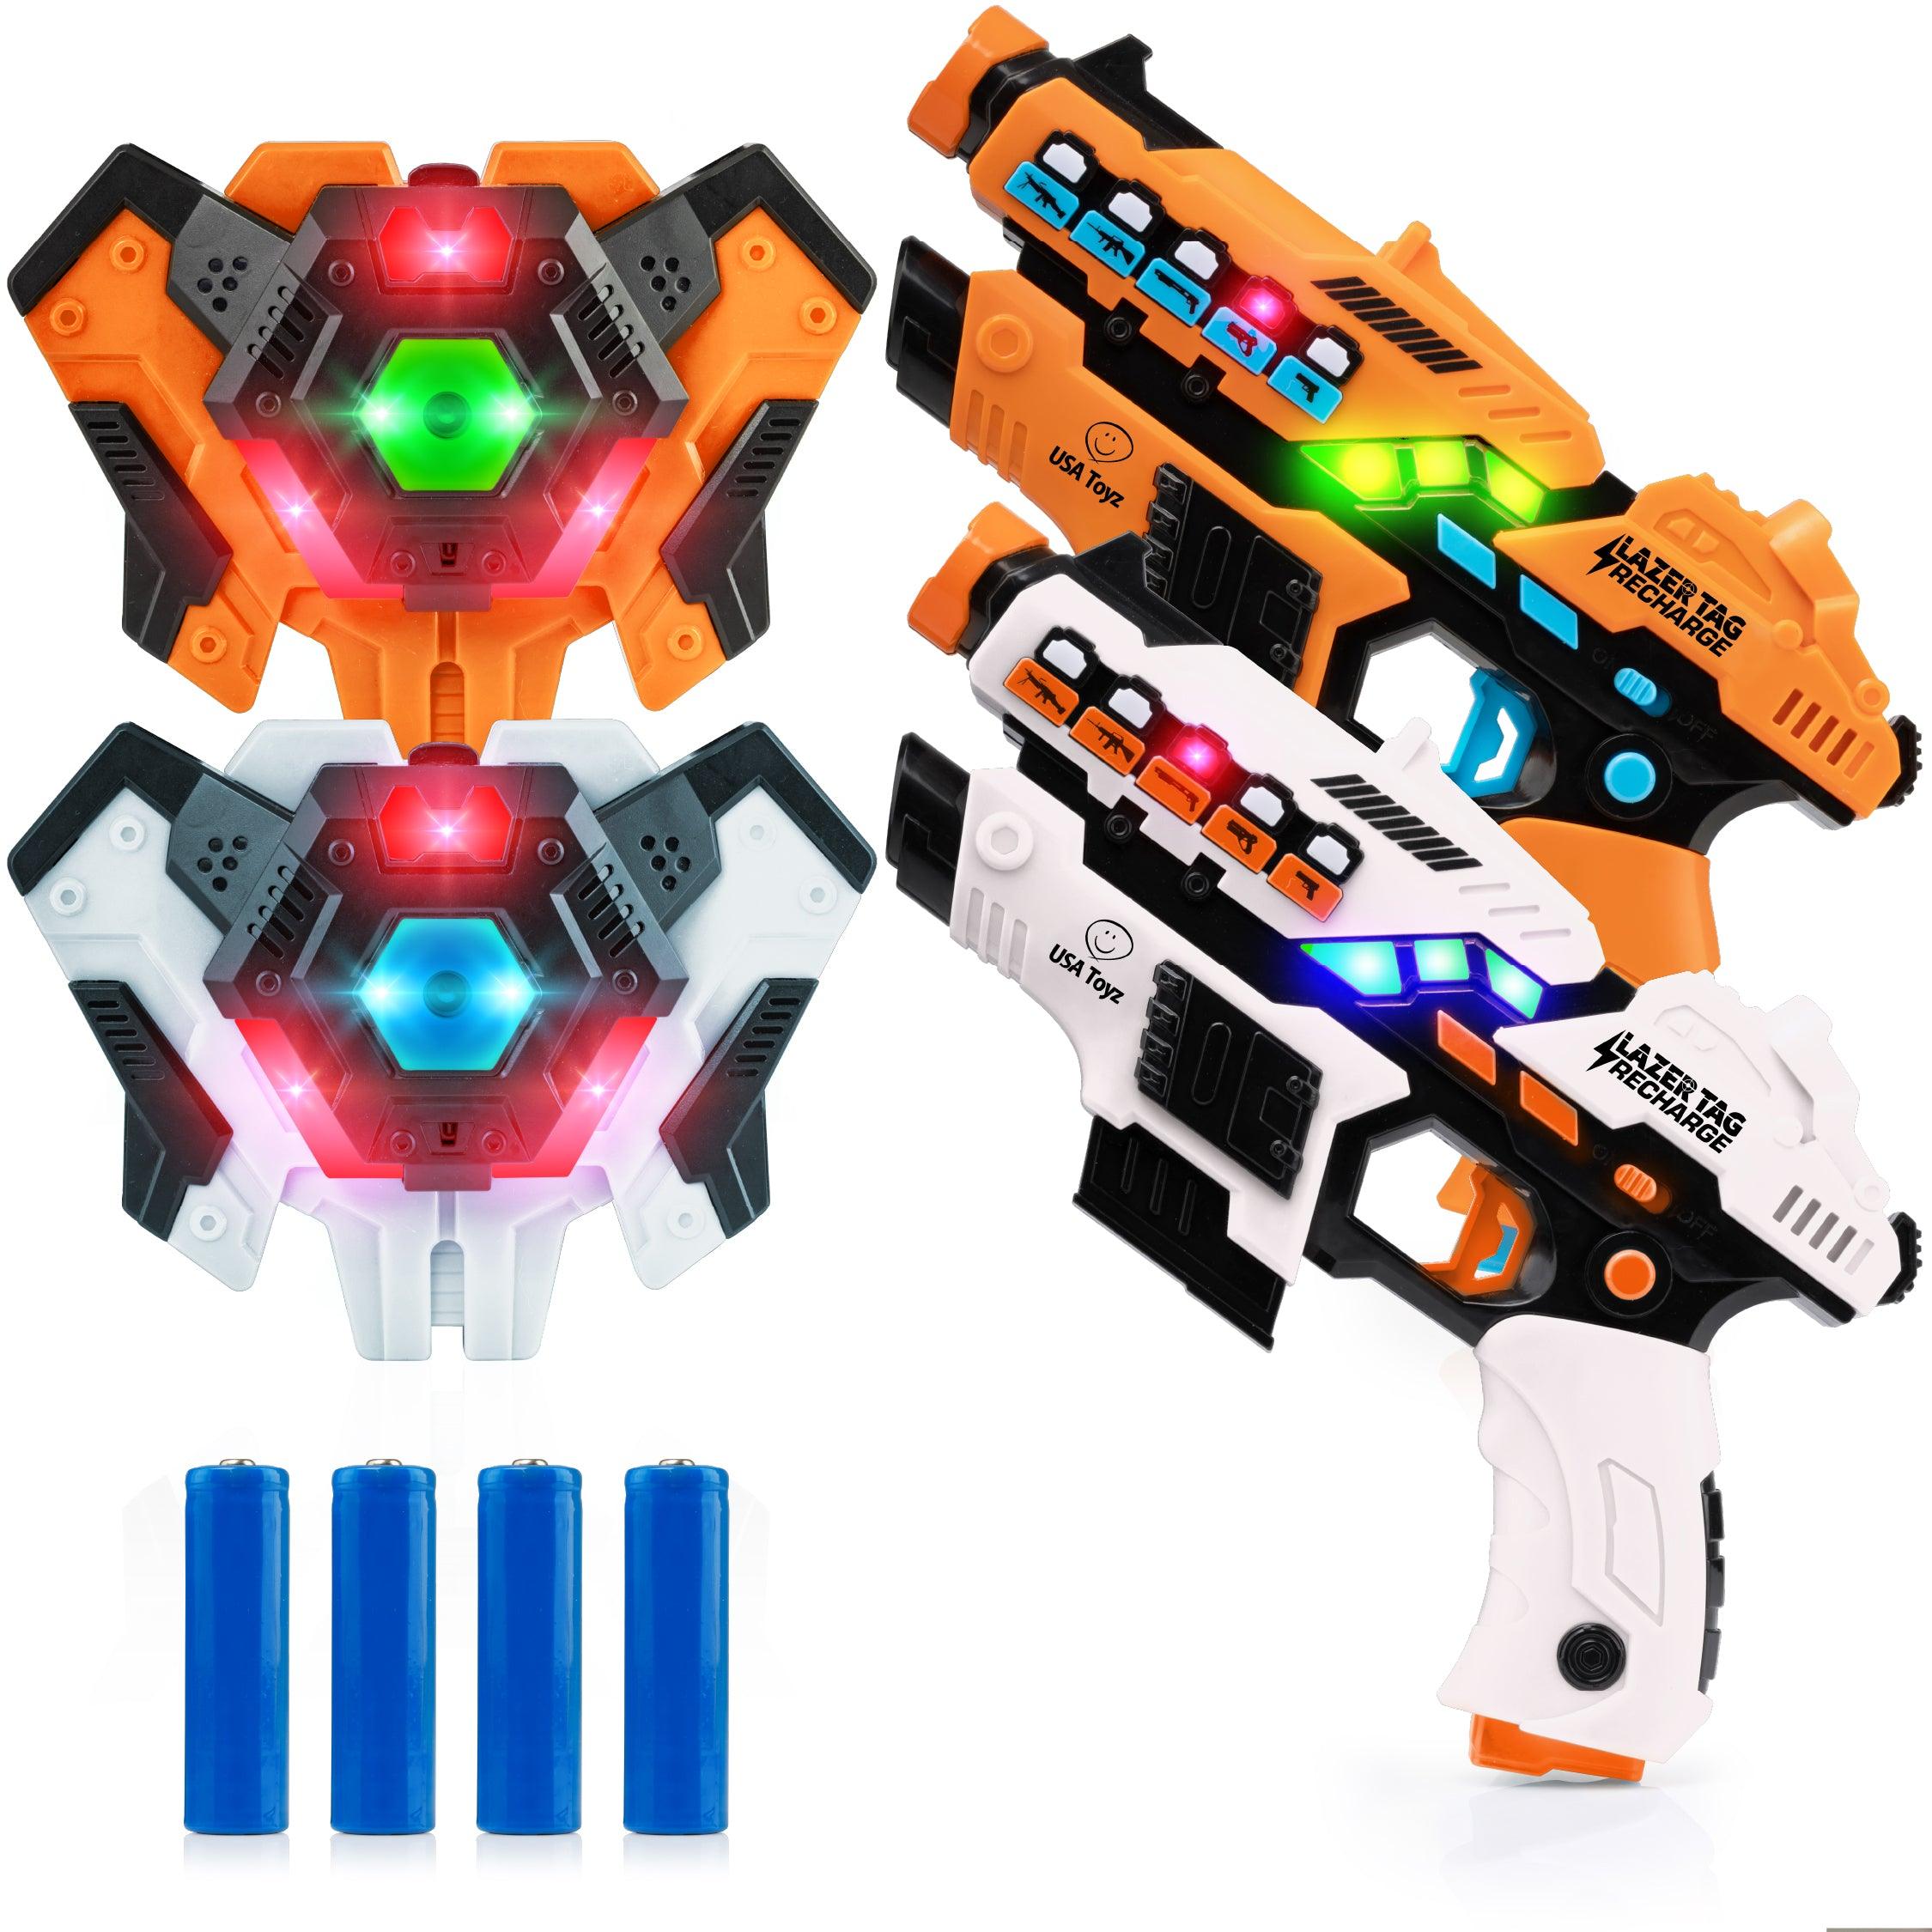 USA Toyz Laser Tag Guns Set with 2 Rechargeable Lazer Toy Guns and 2 Rechargeable Laser Tag Vests - USA Toyz